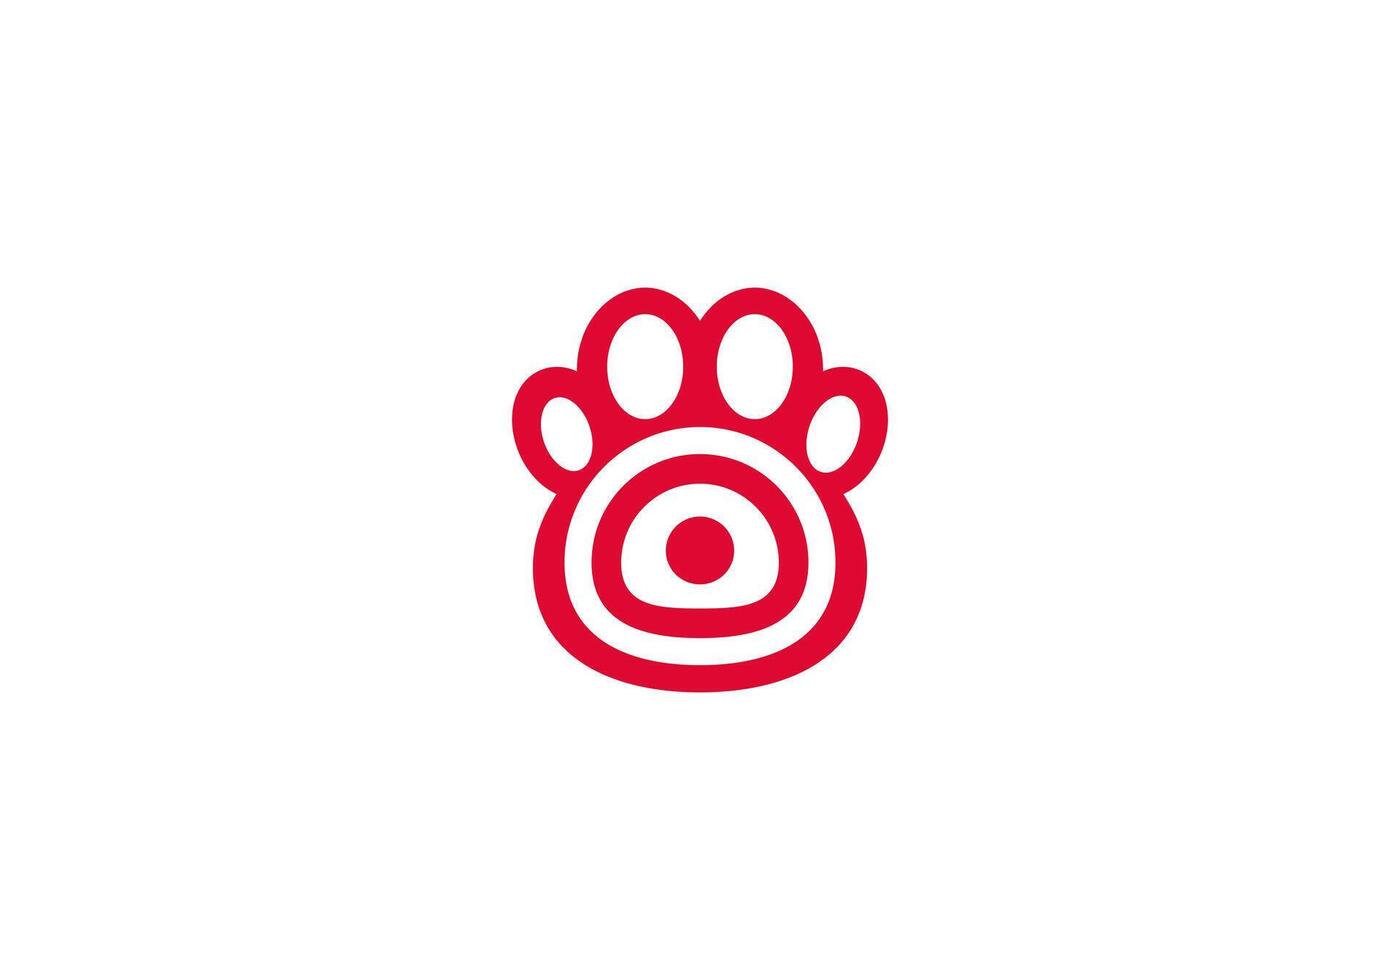 Logo Paw dog and Target, Minimalist and Modern Logo Template Premium. Editable File vector